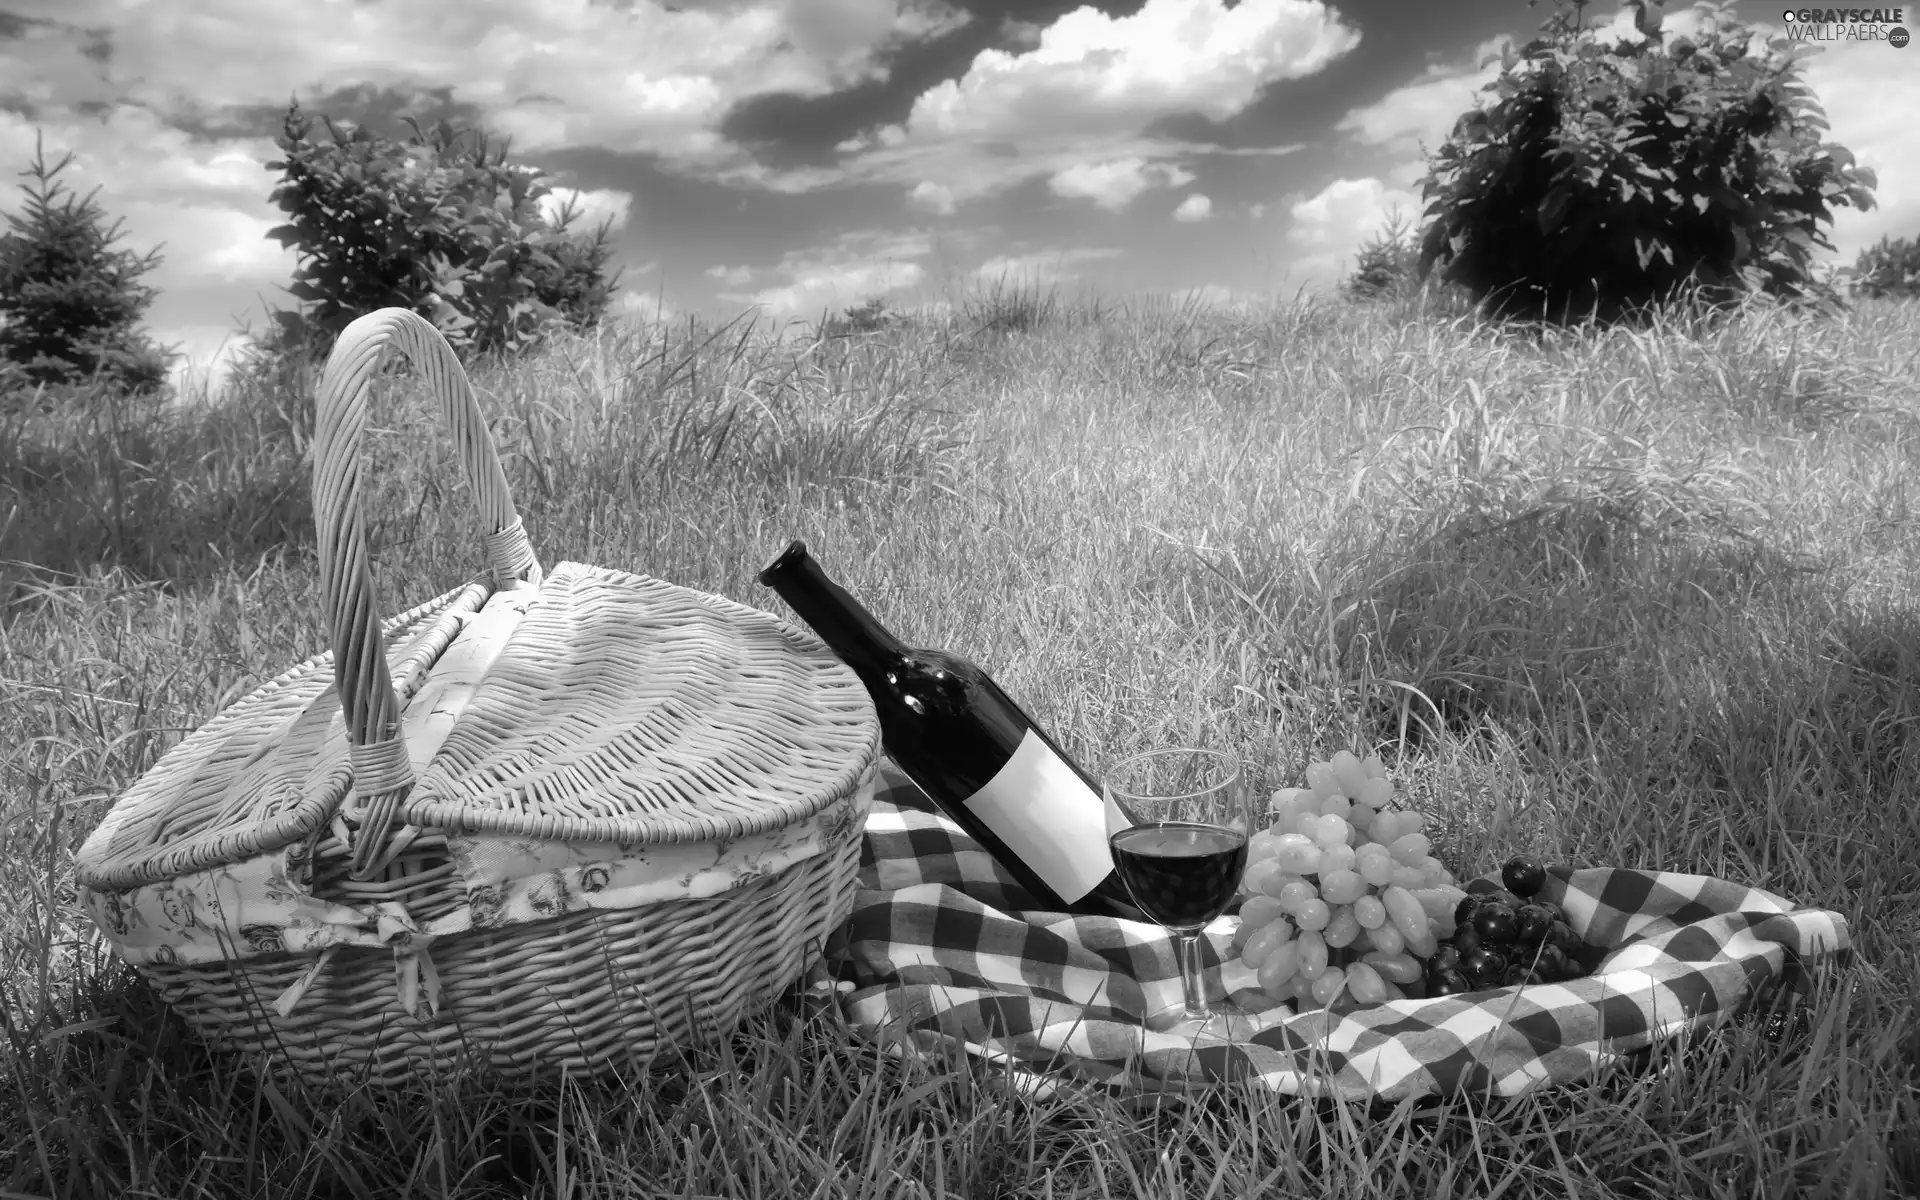 Grapes, picnic, basket, Wine, grass